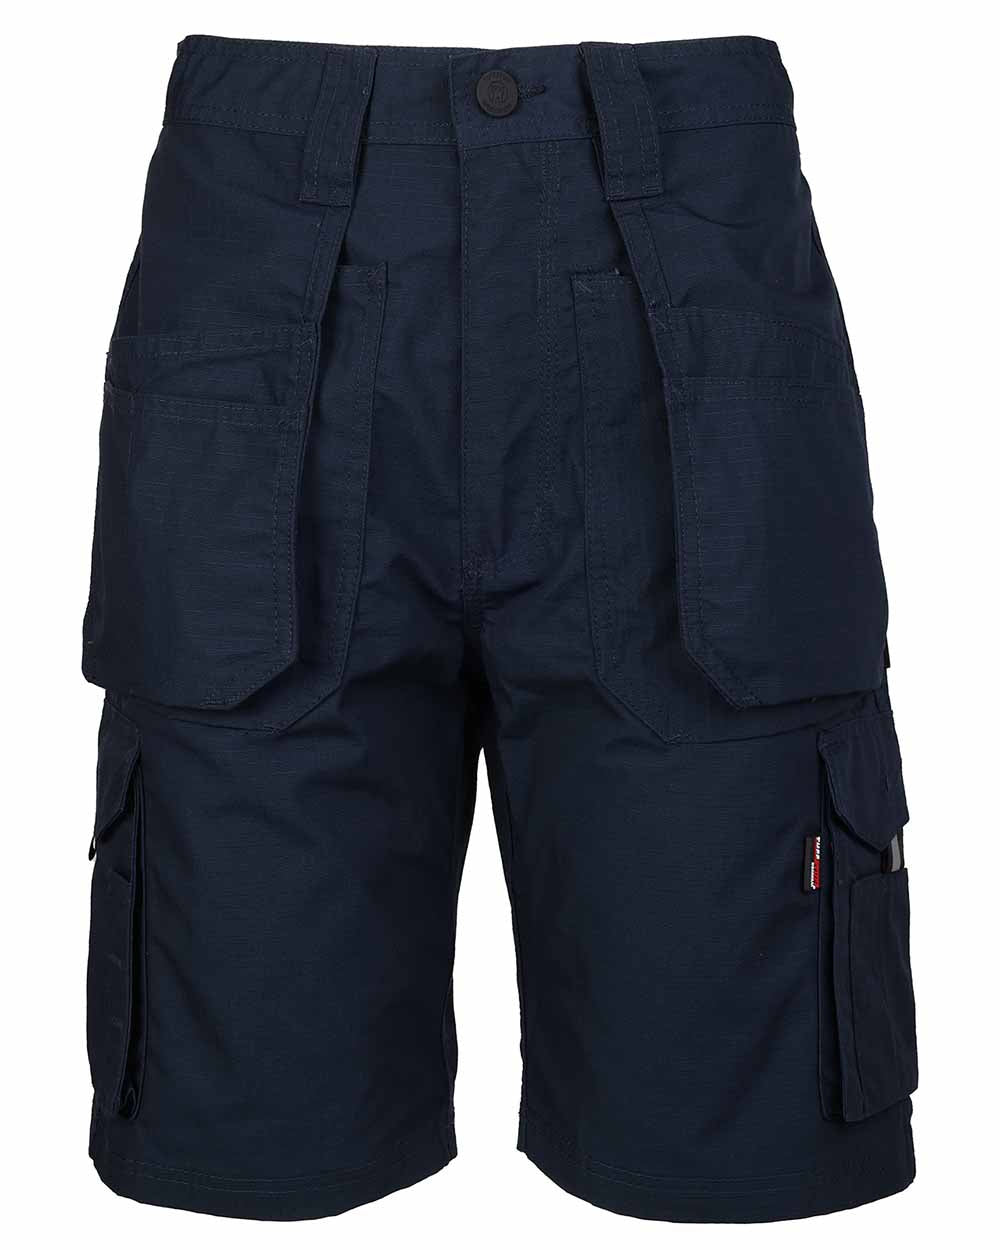 Navy Coloured TuffStuff Enduro Work Shorts On A White Background 